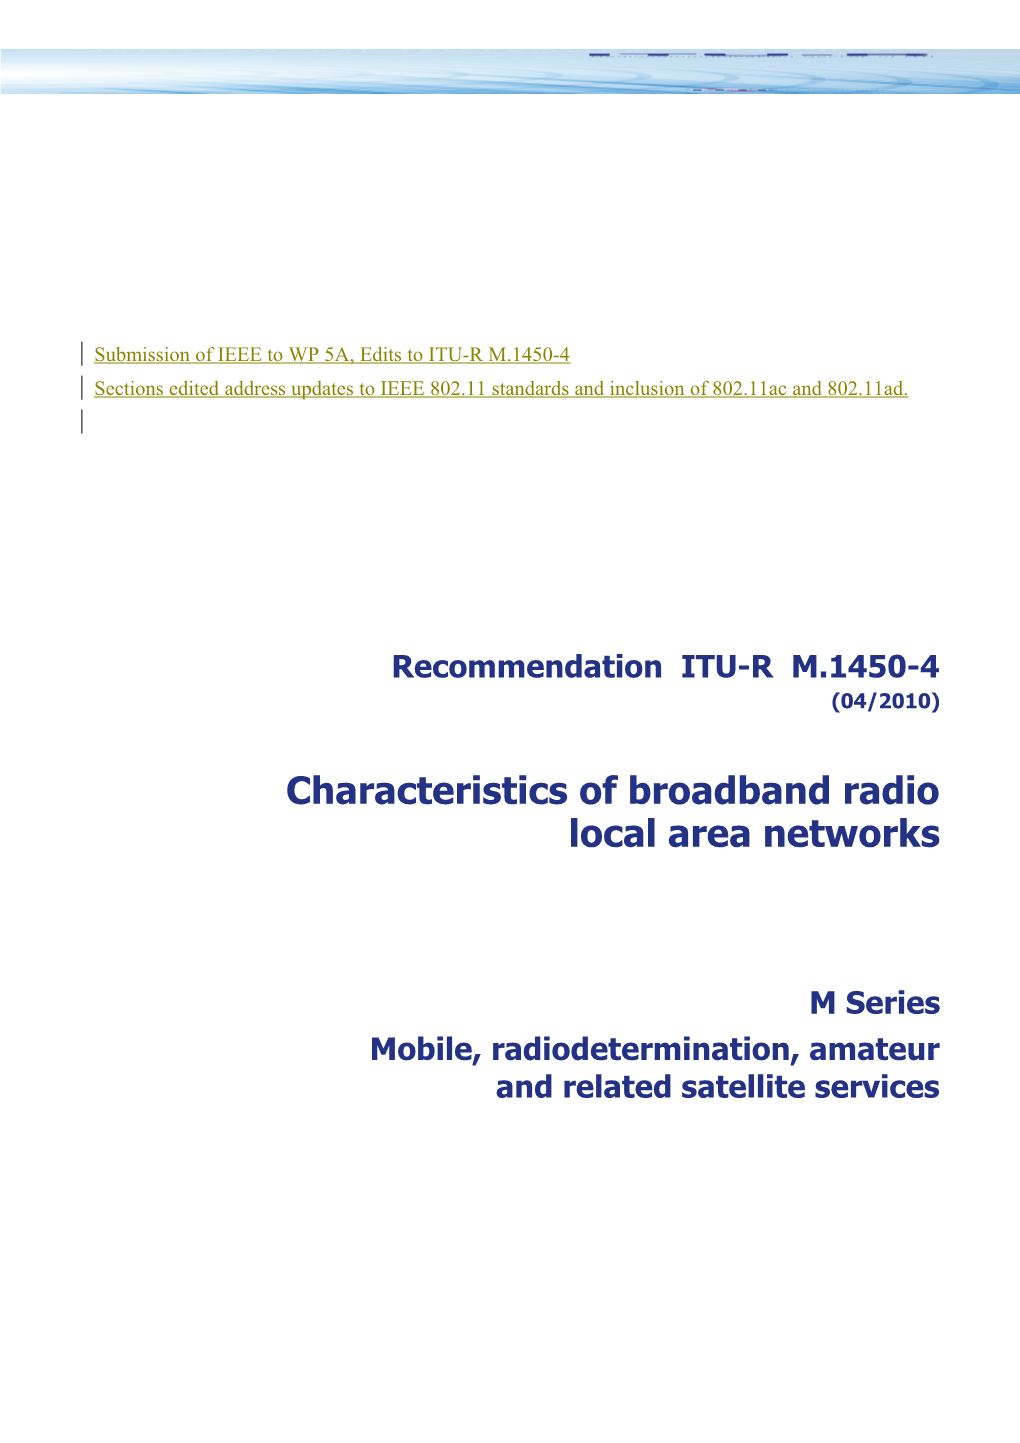 RECOMMENDATION ITU-R M.1450-4 - Characteristics of Broadband Radio Local Area Networks